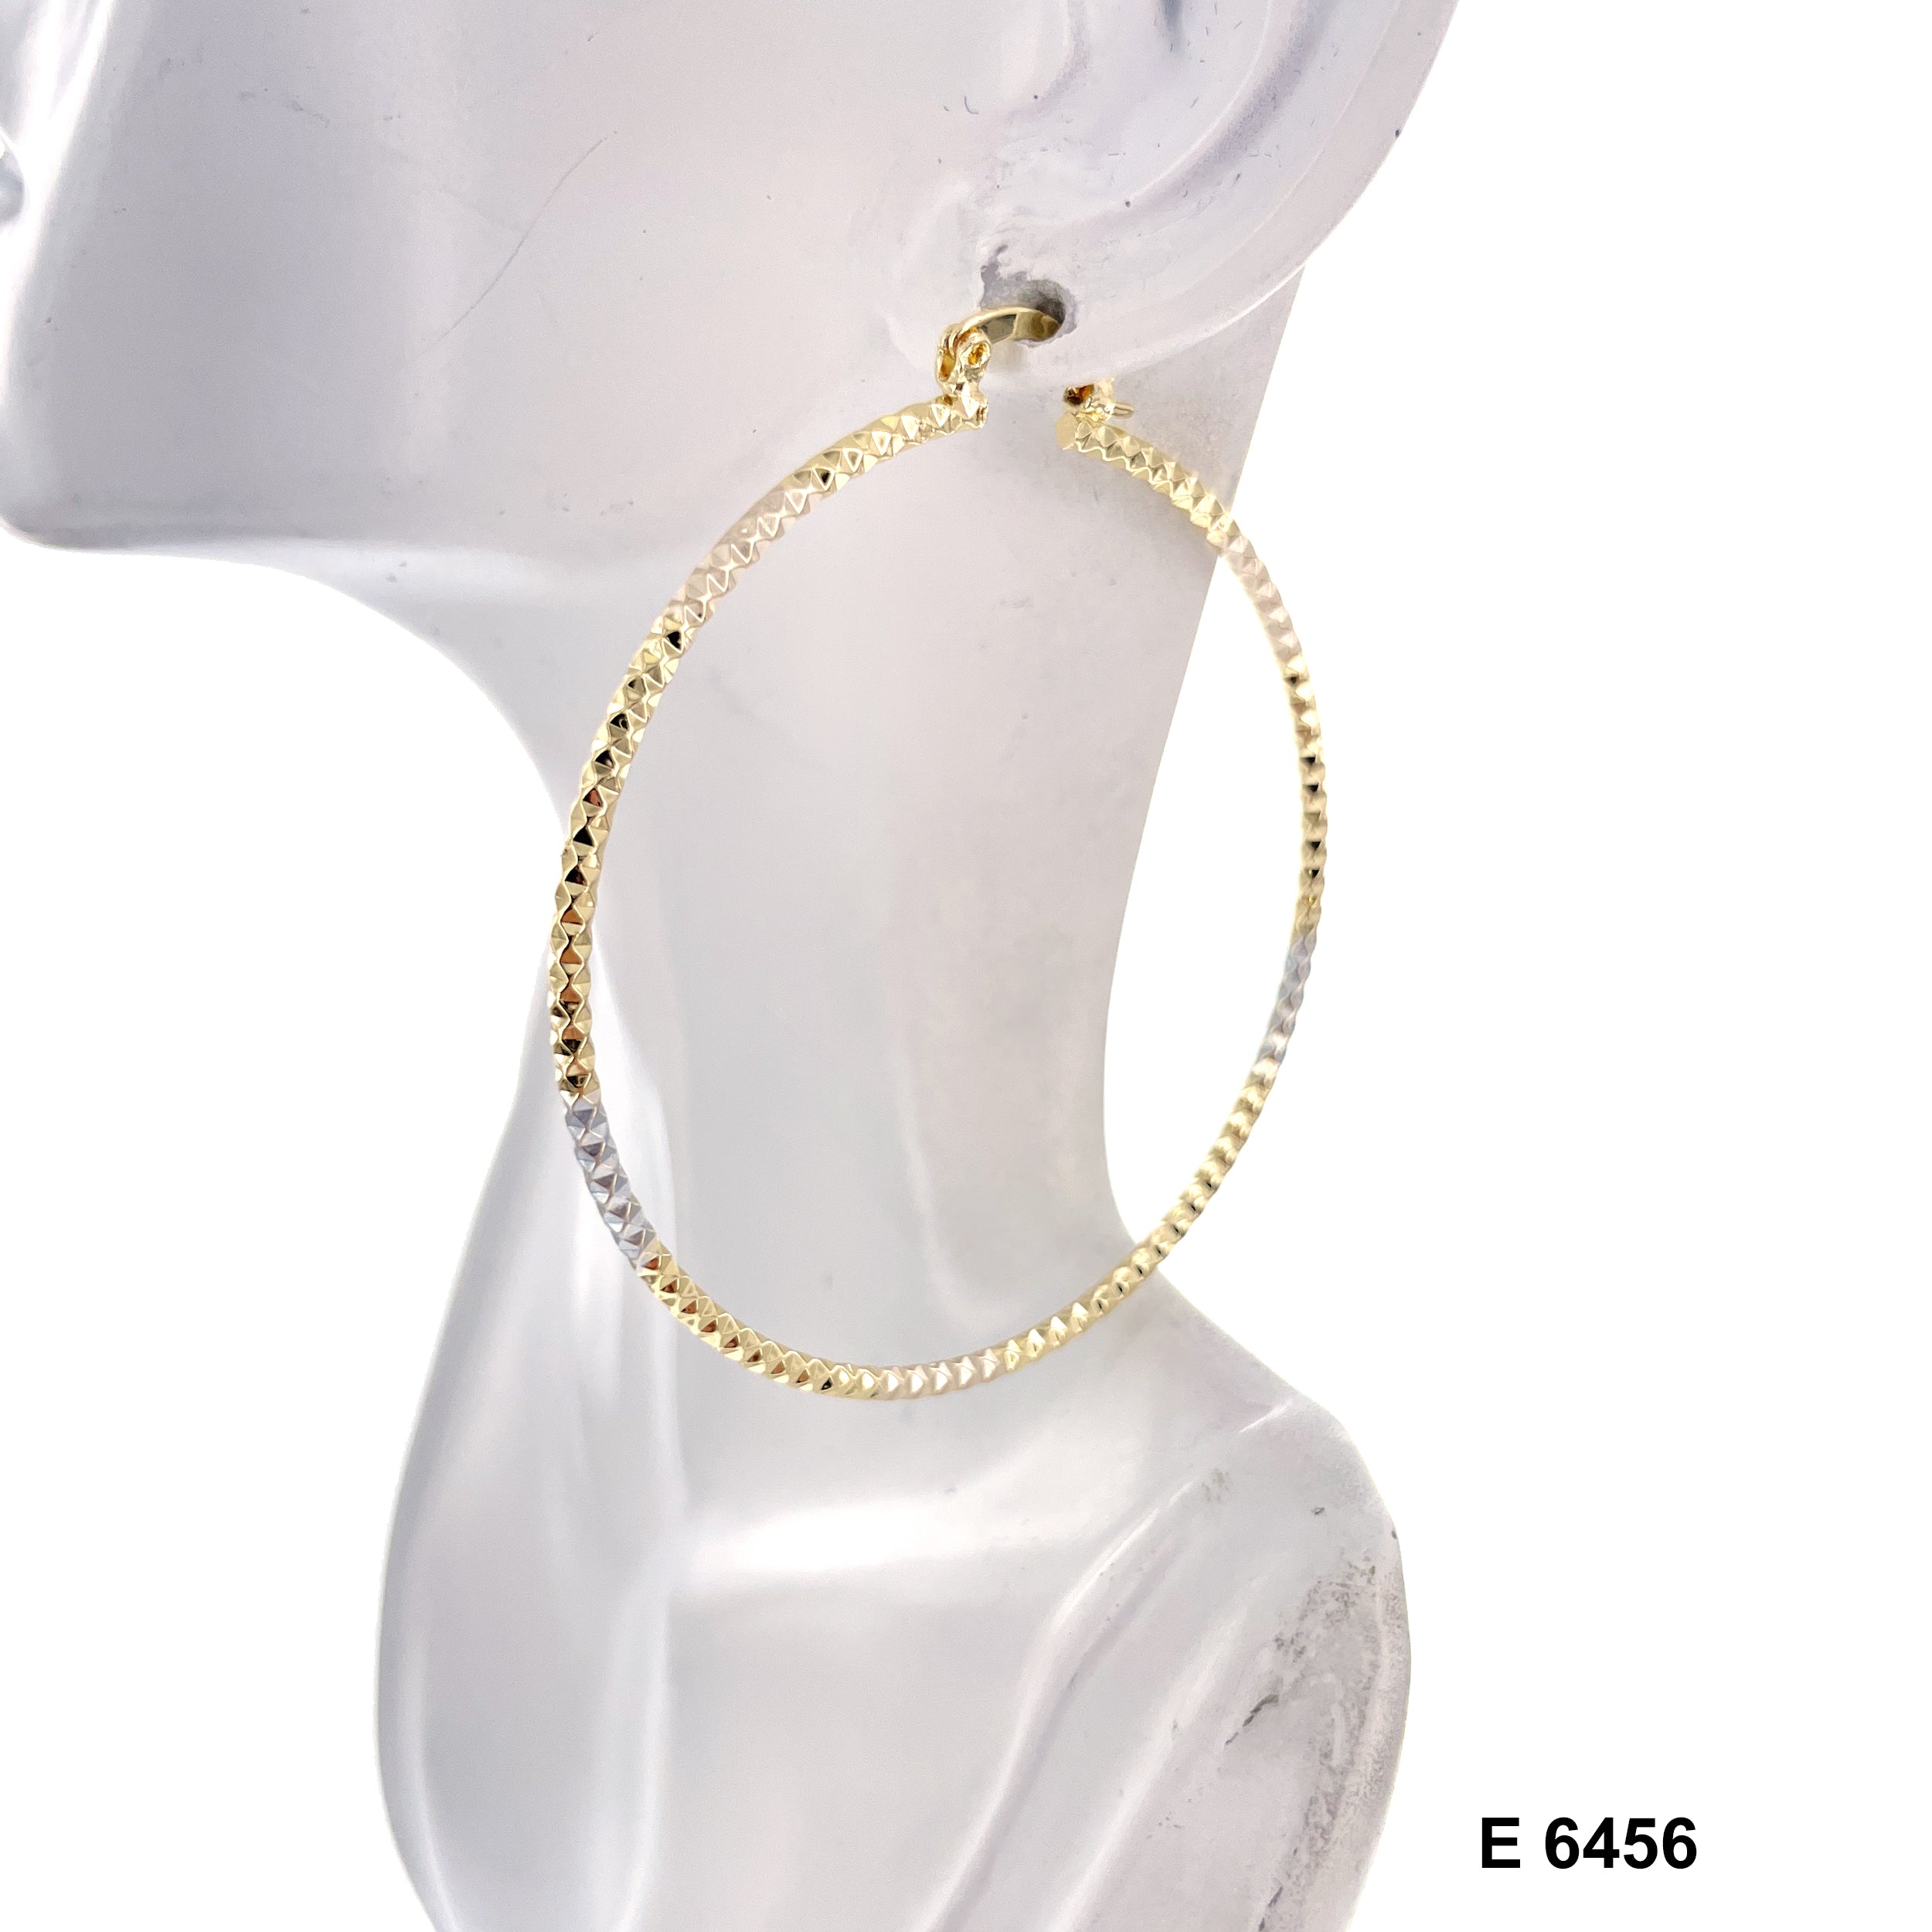 Engraved Hoop Earrings E 6456